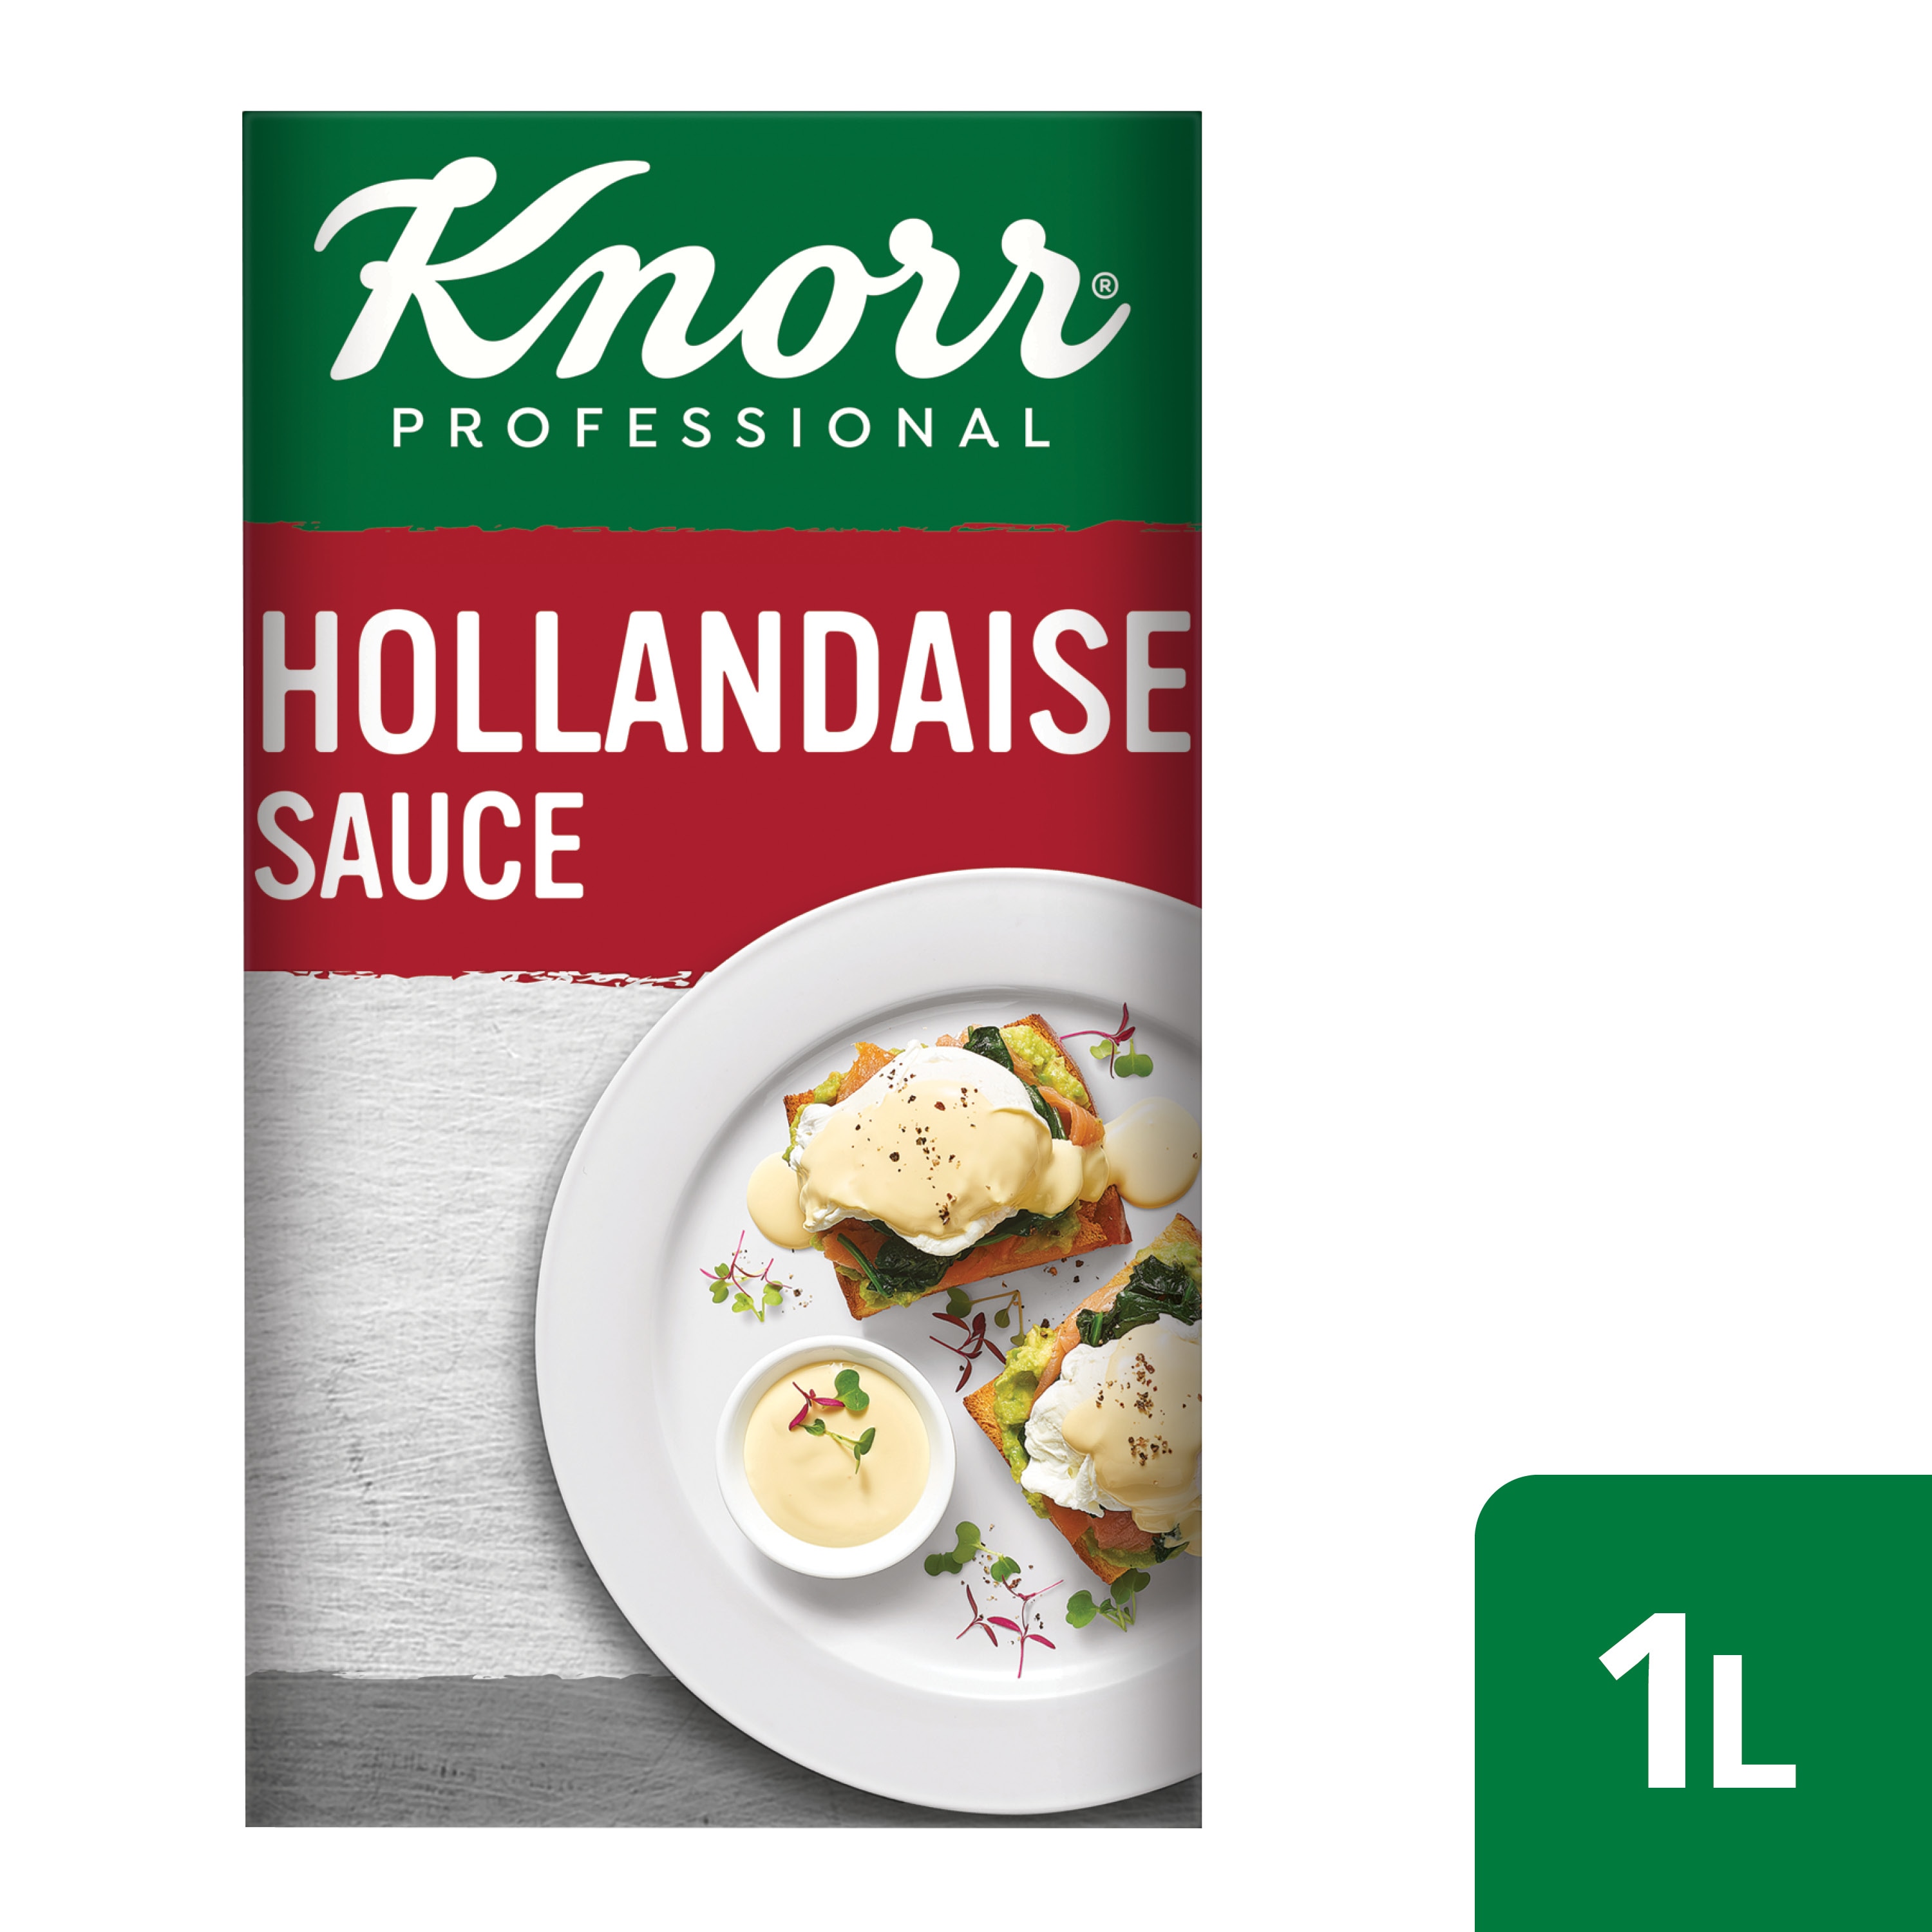 Knorr Professional Hollandaise Sauce - 1 L